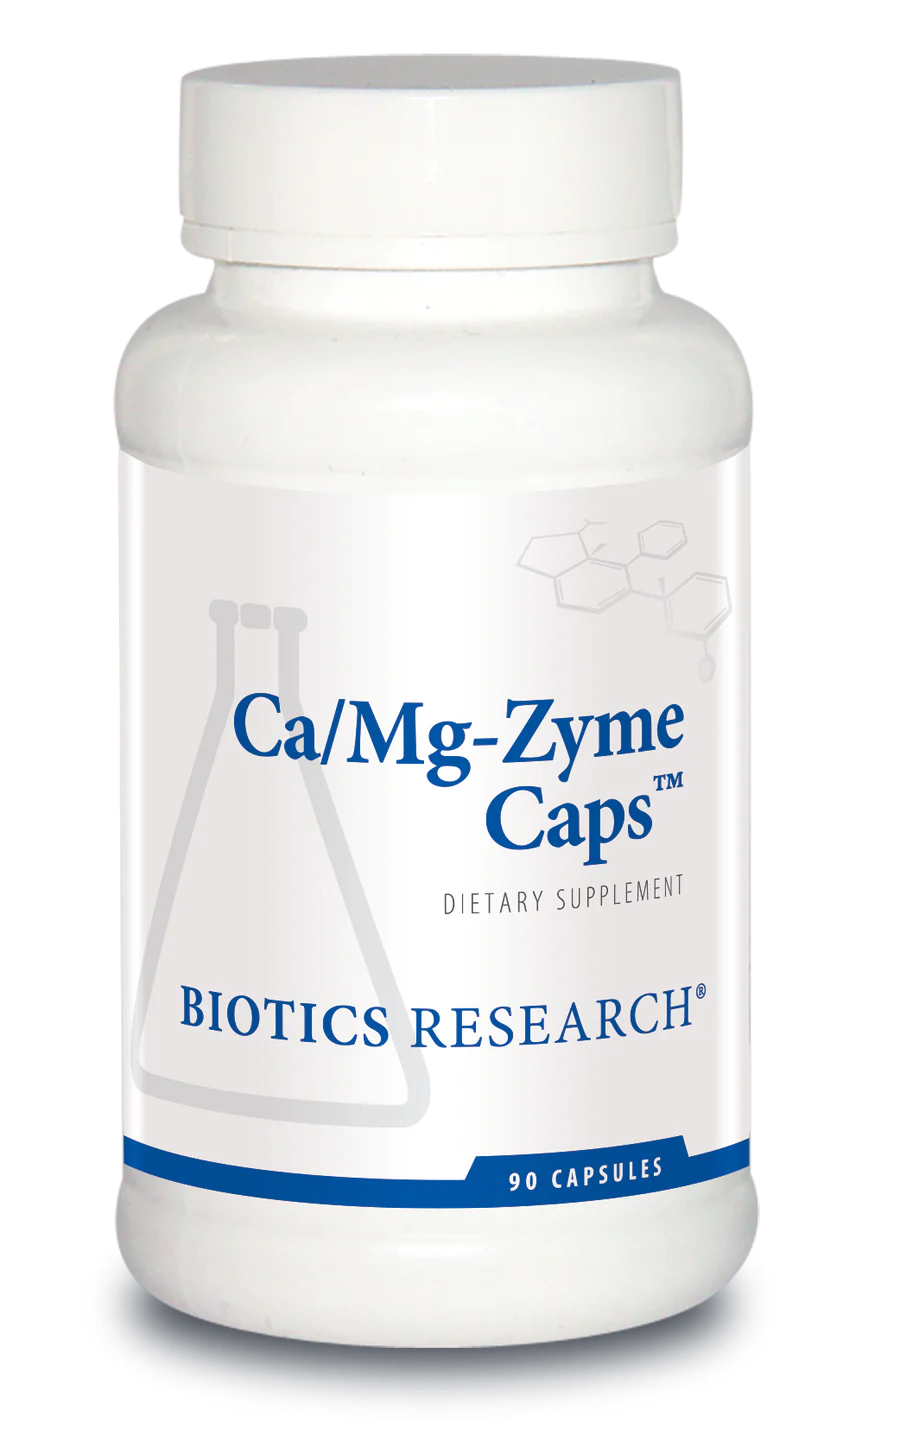 Ca/Mg-Zyme Caps™